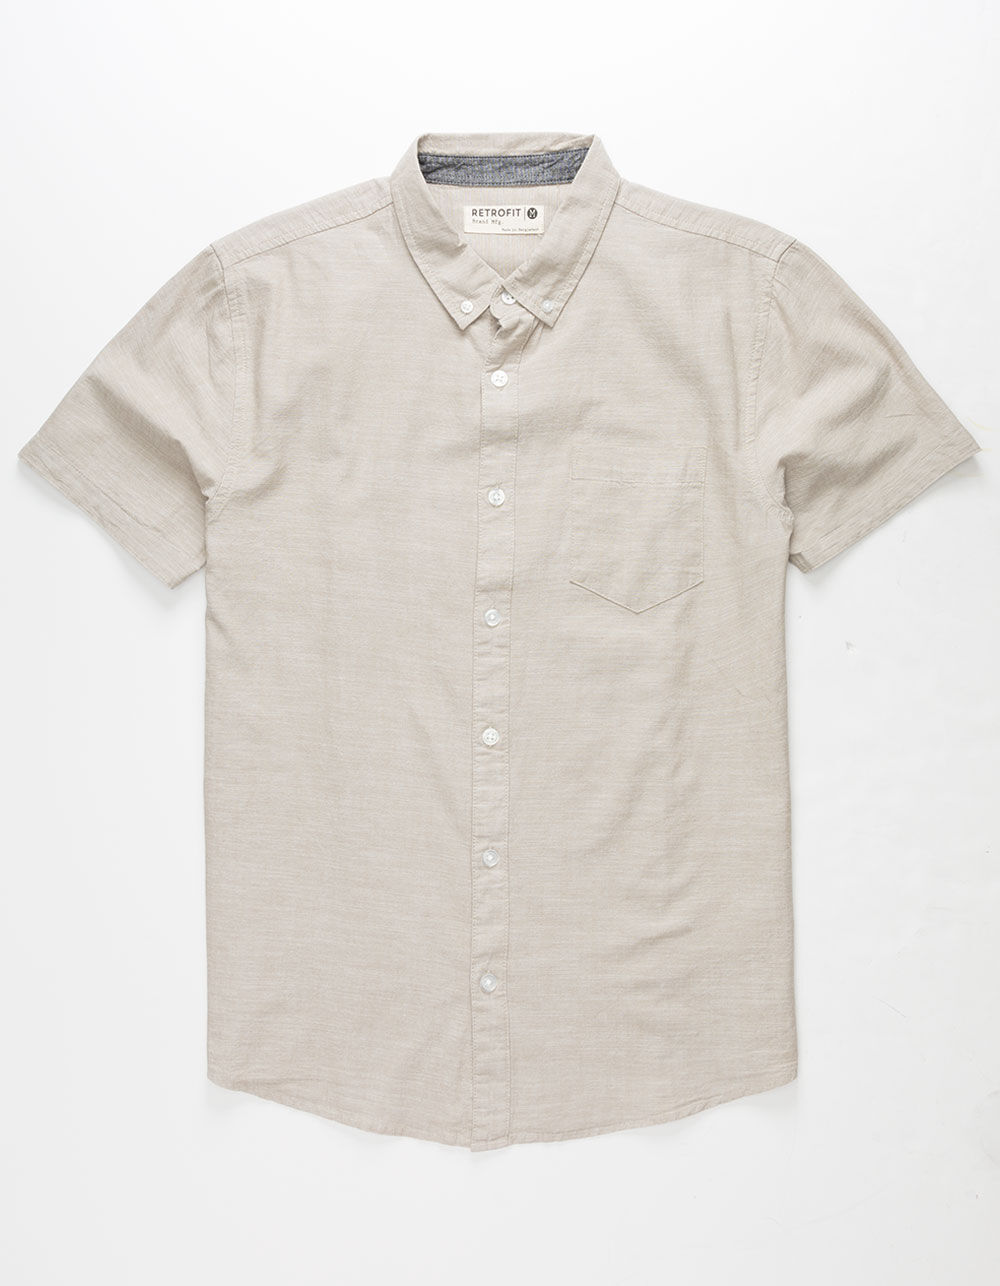 RETROFIT Crosshatch Khaki Mens Shirt image number 0